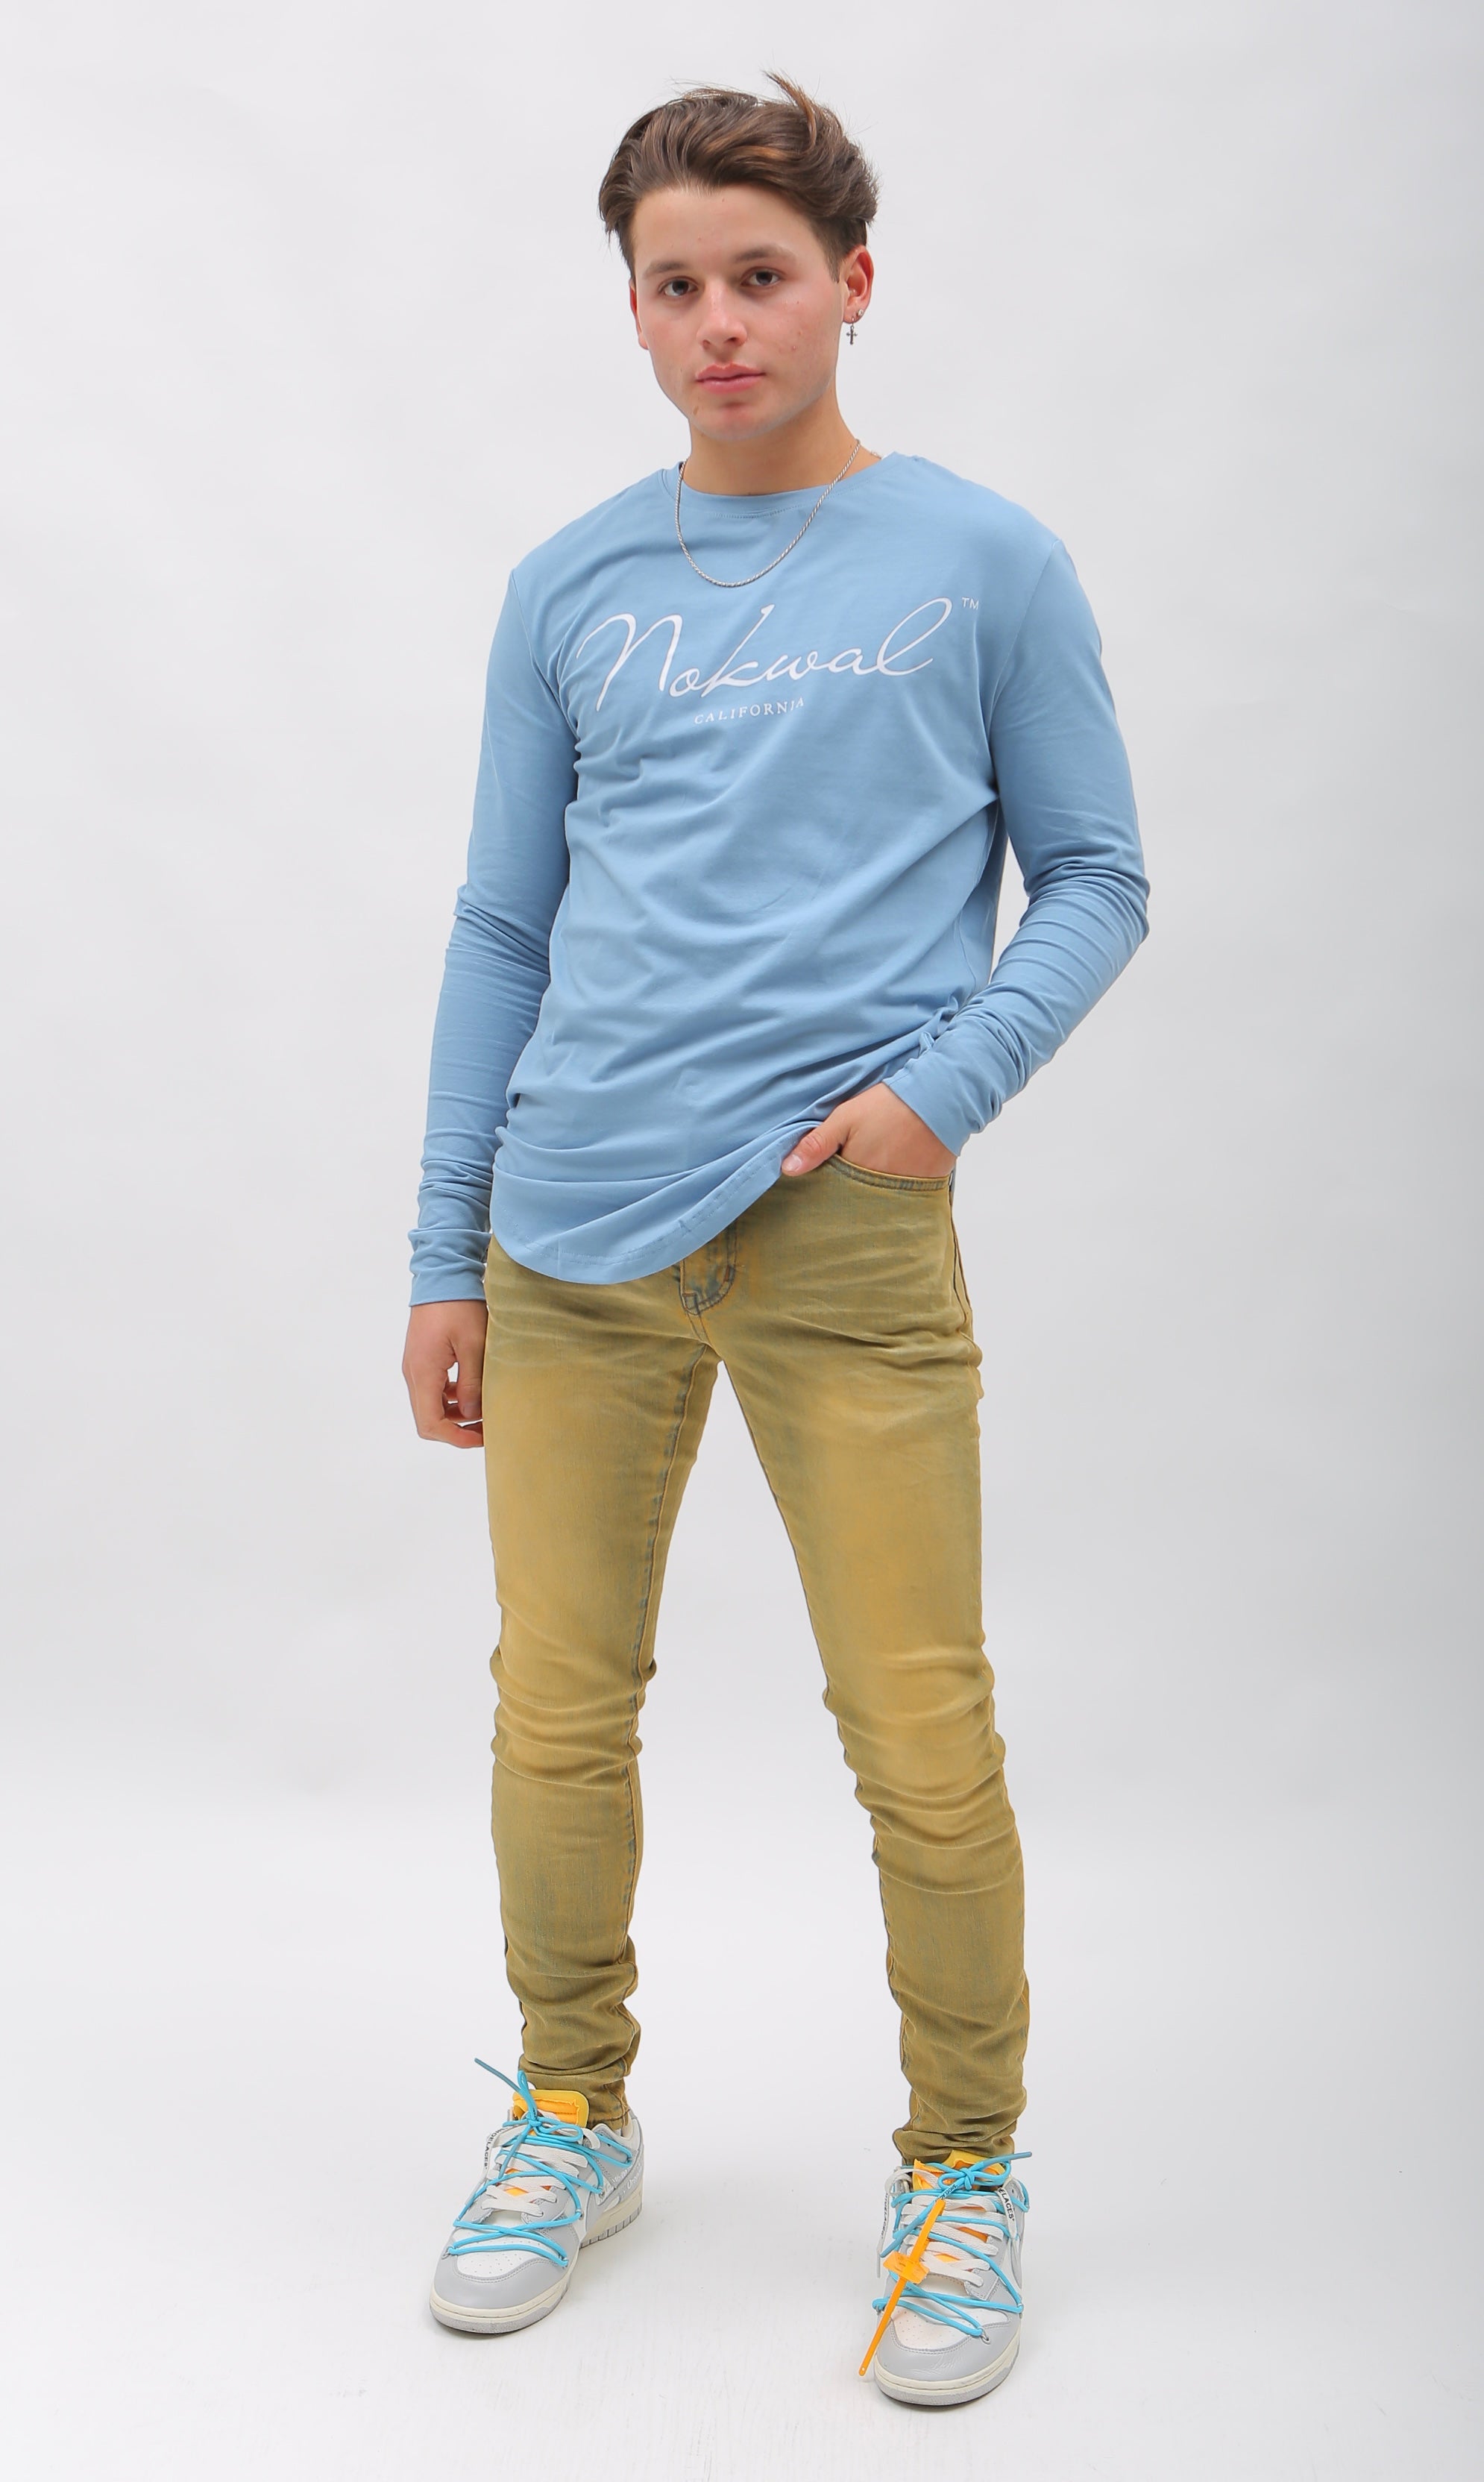 Light Blue Signature Long Sleeve T Shirt W/ White NOKWAL SIGNATURE